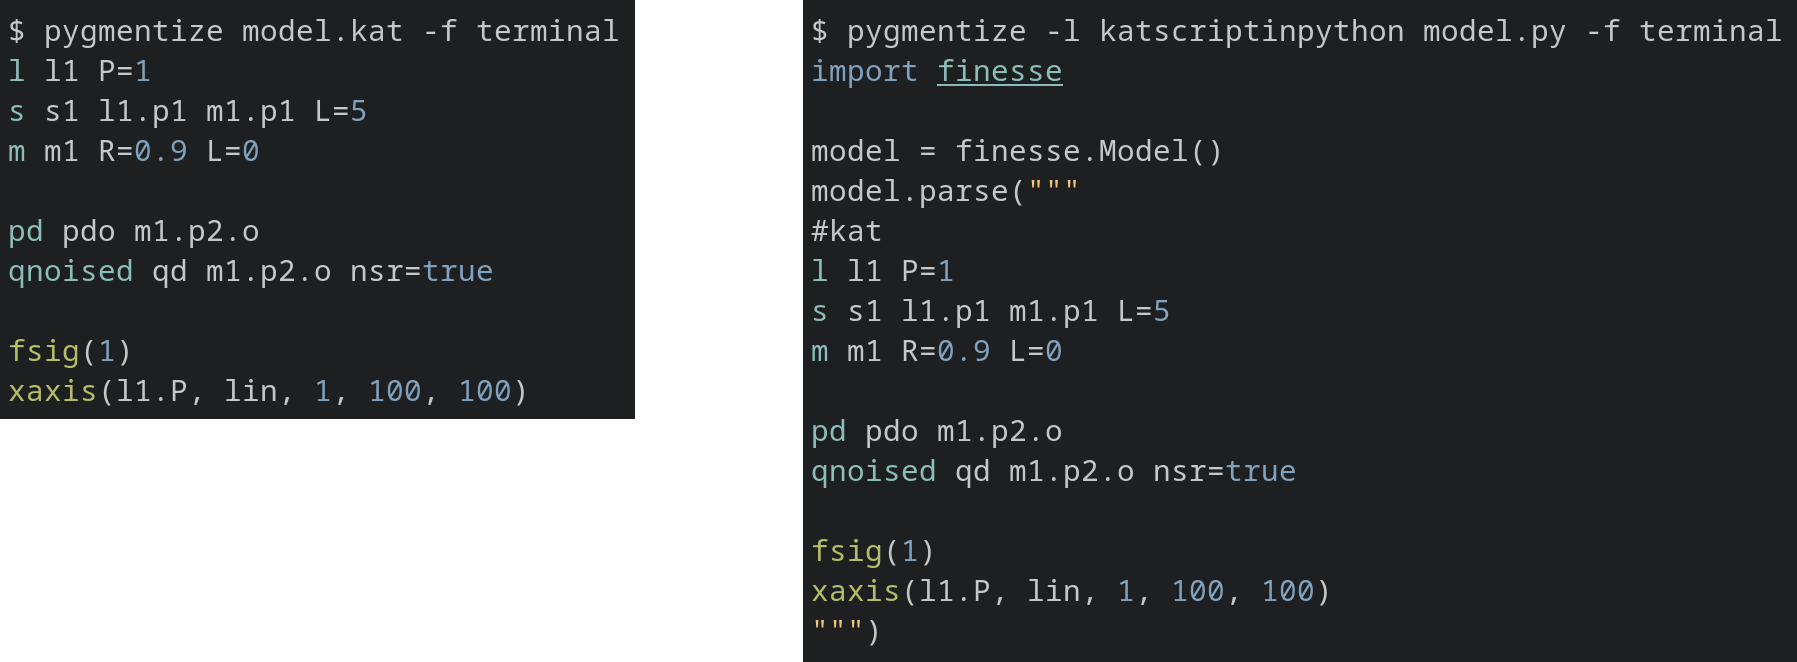 ../_images/katscript-pygments-example.png